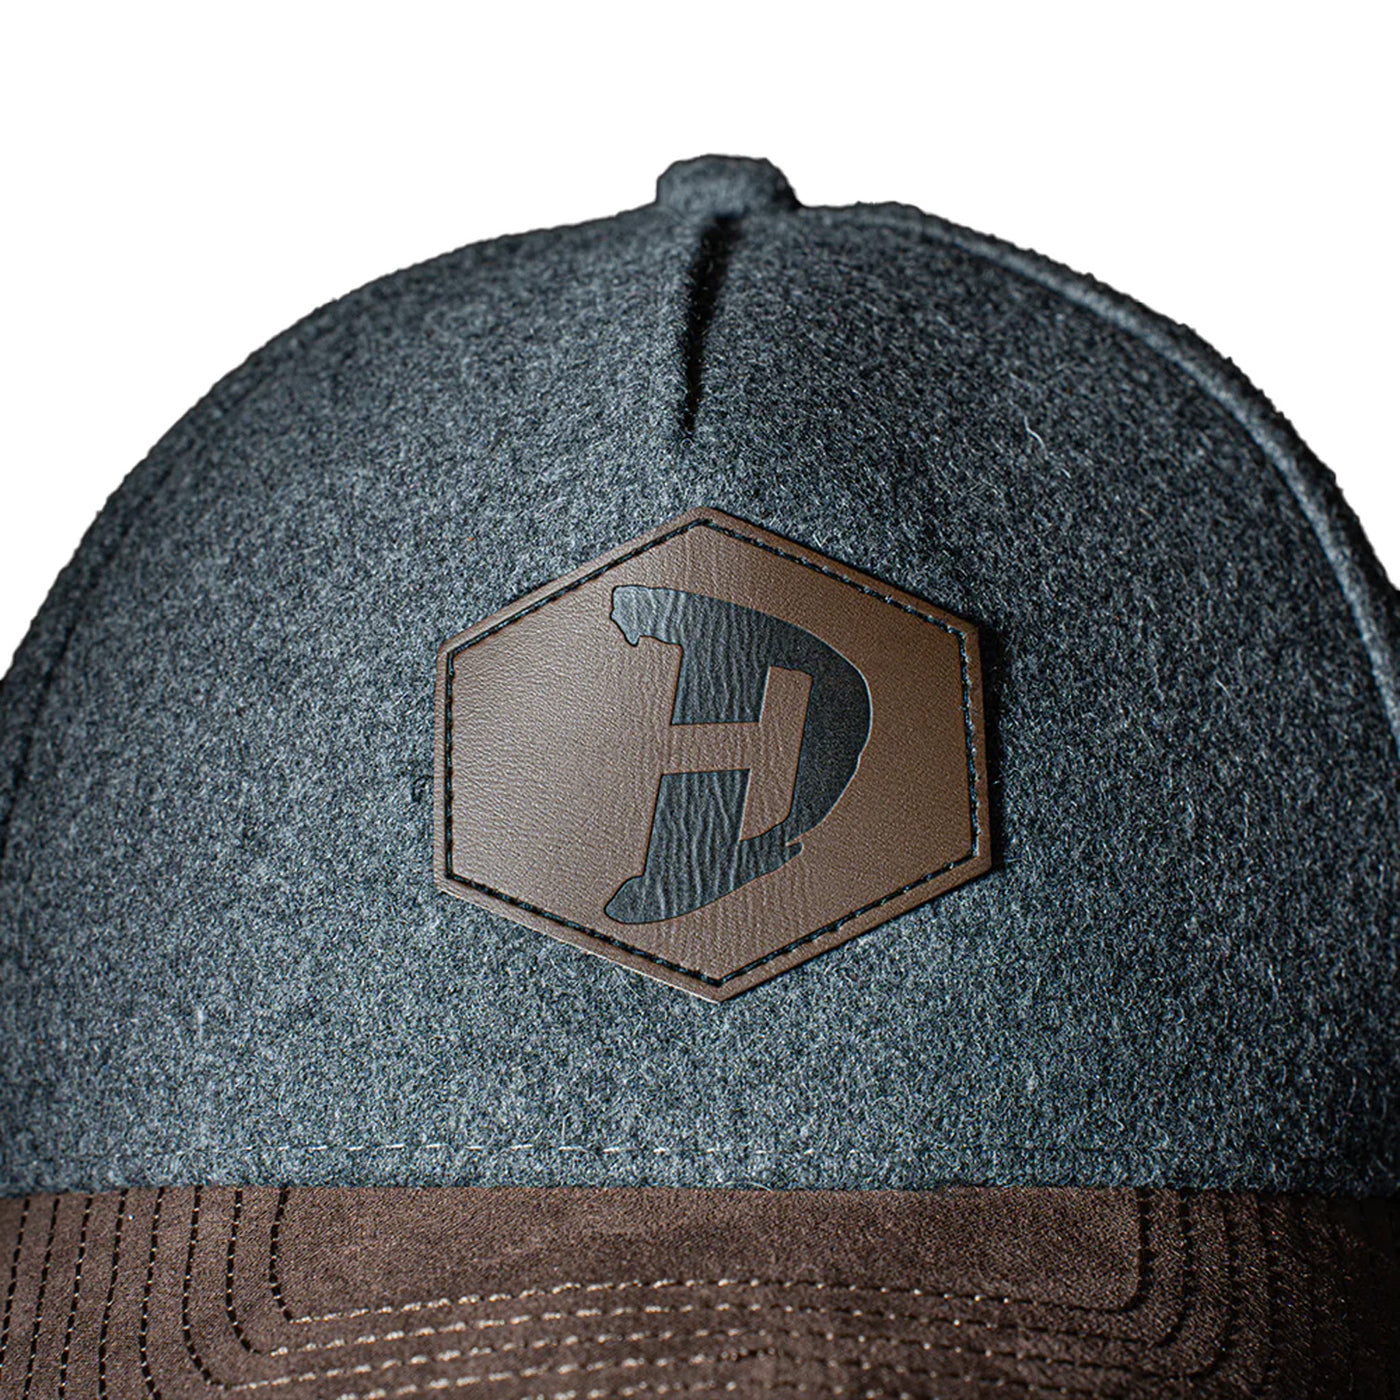 Daytona Helmets Vintage Leather Cap